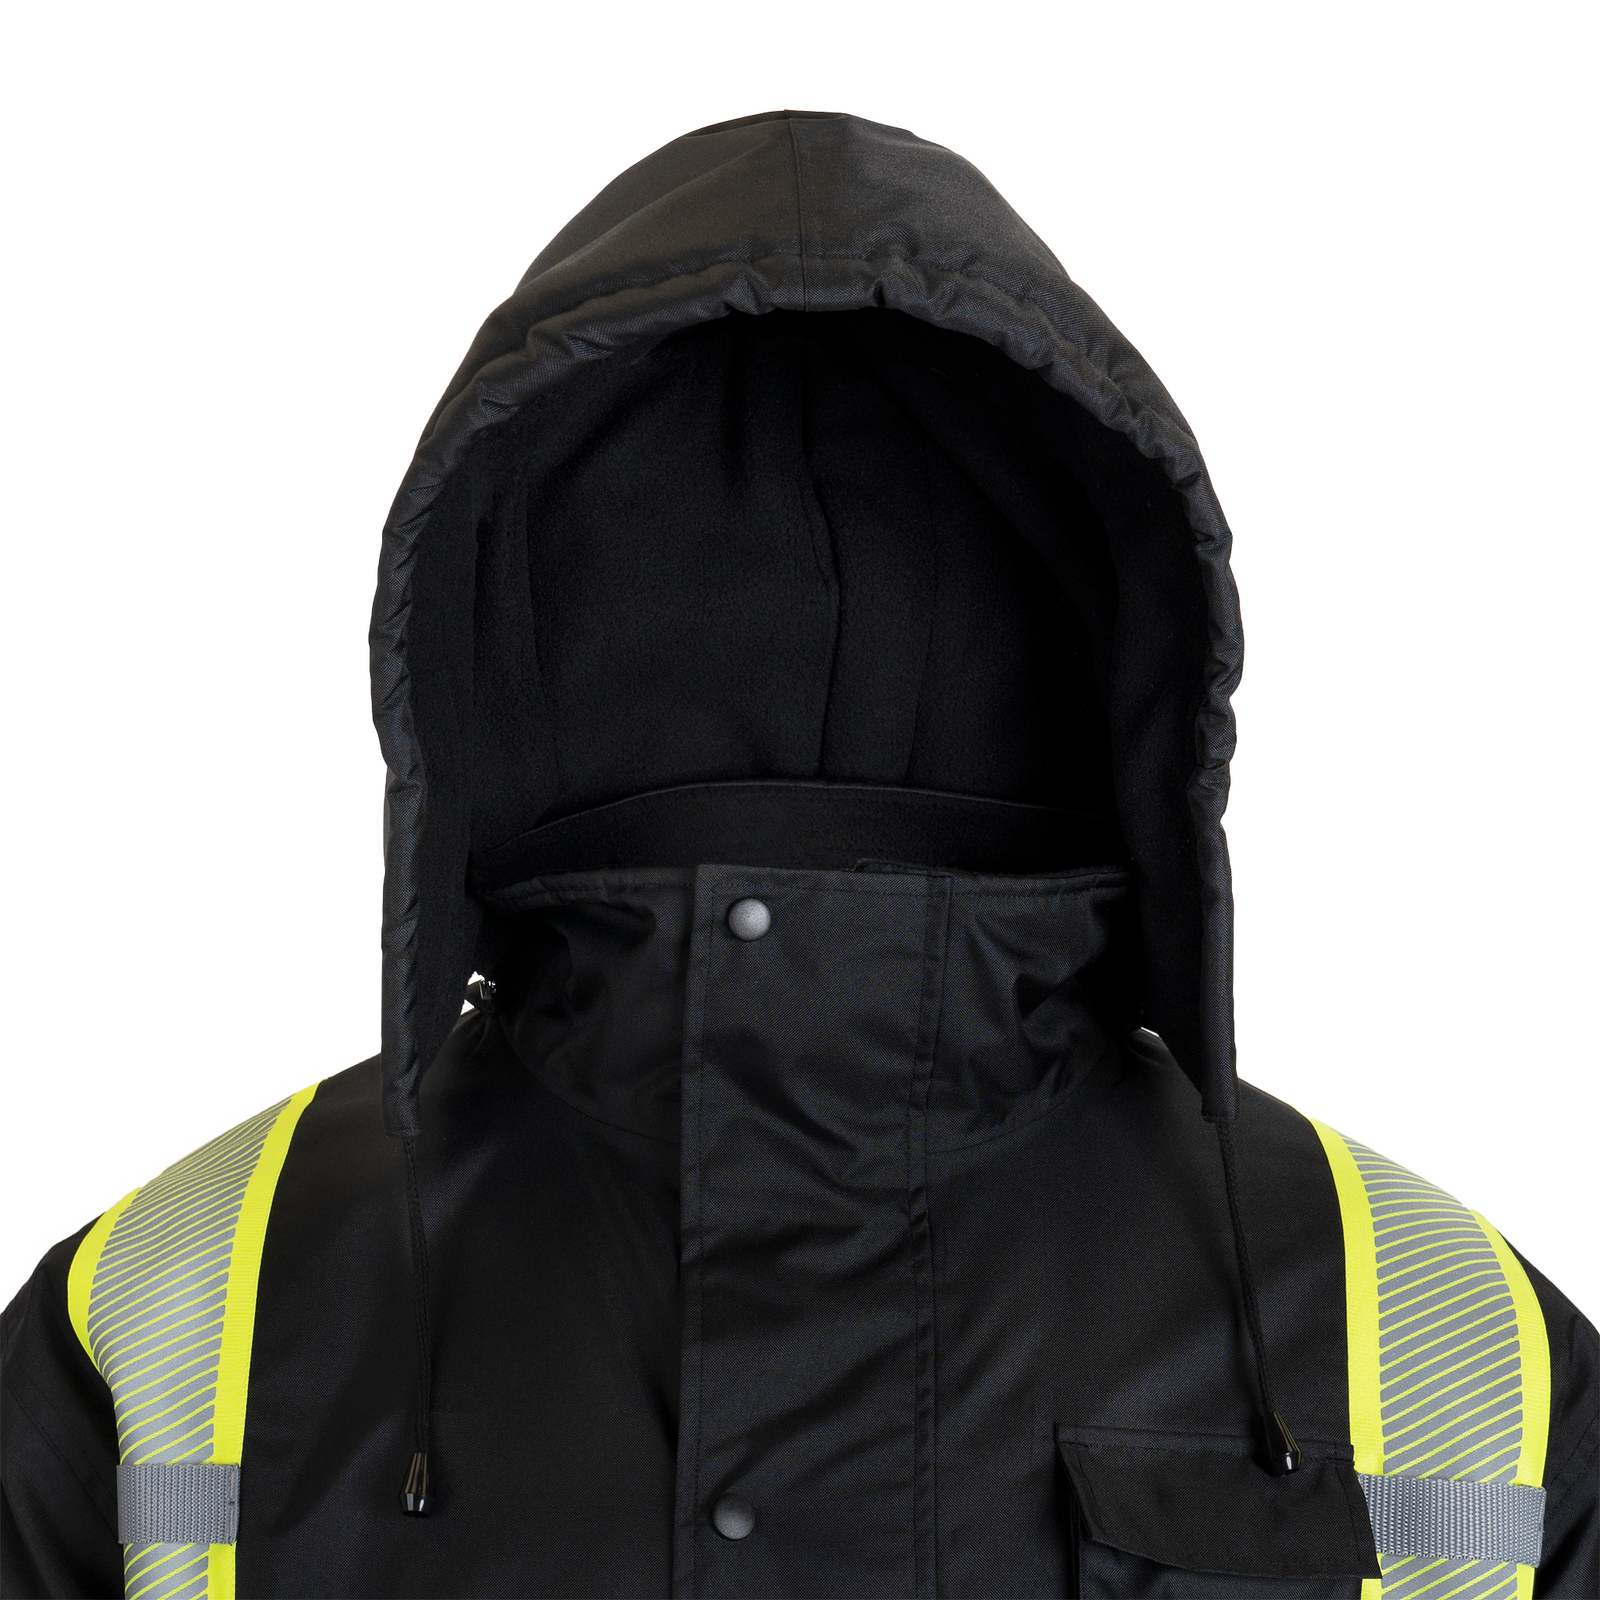 High Vis waterproof safety jacket with fleece and detachable hood